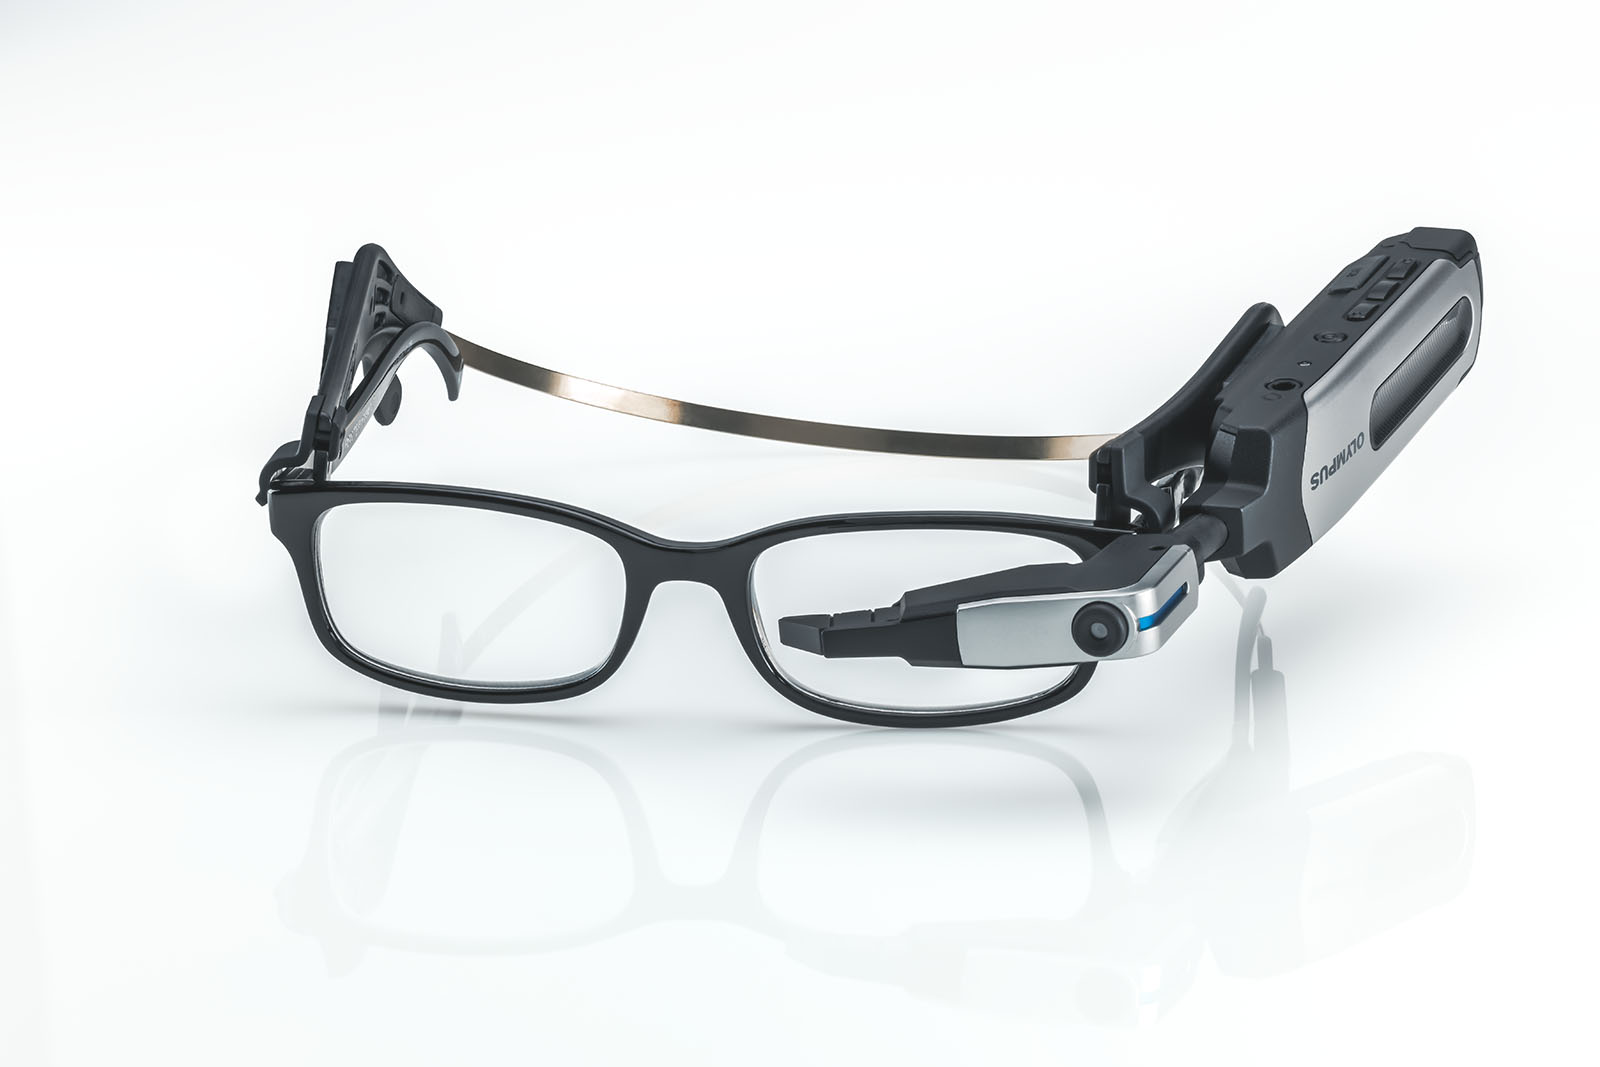 olympus smart glasses el 10 announced eyetrek insight ei 170920 090 s